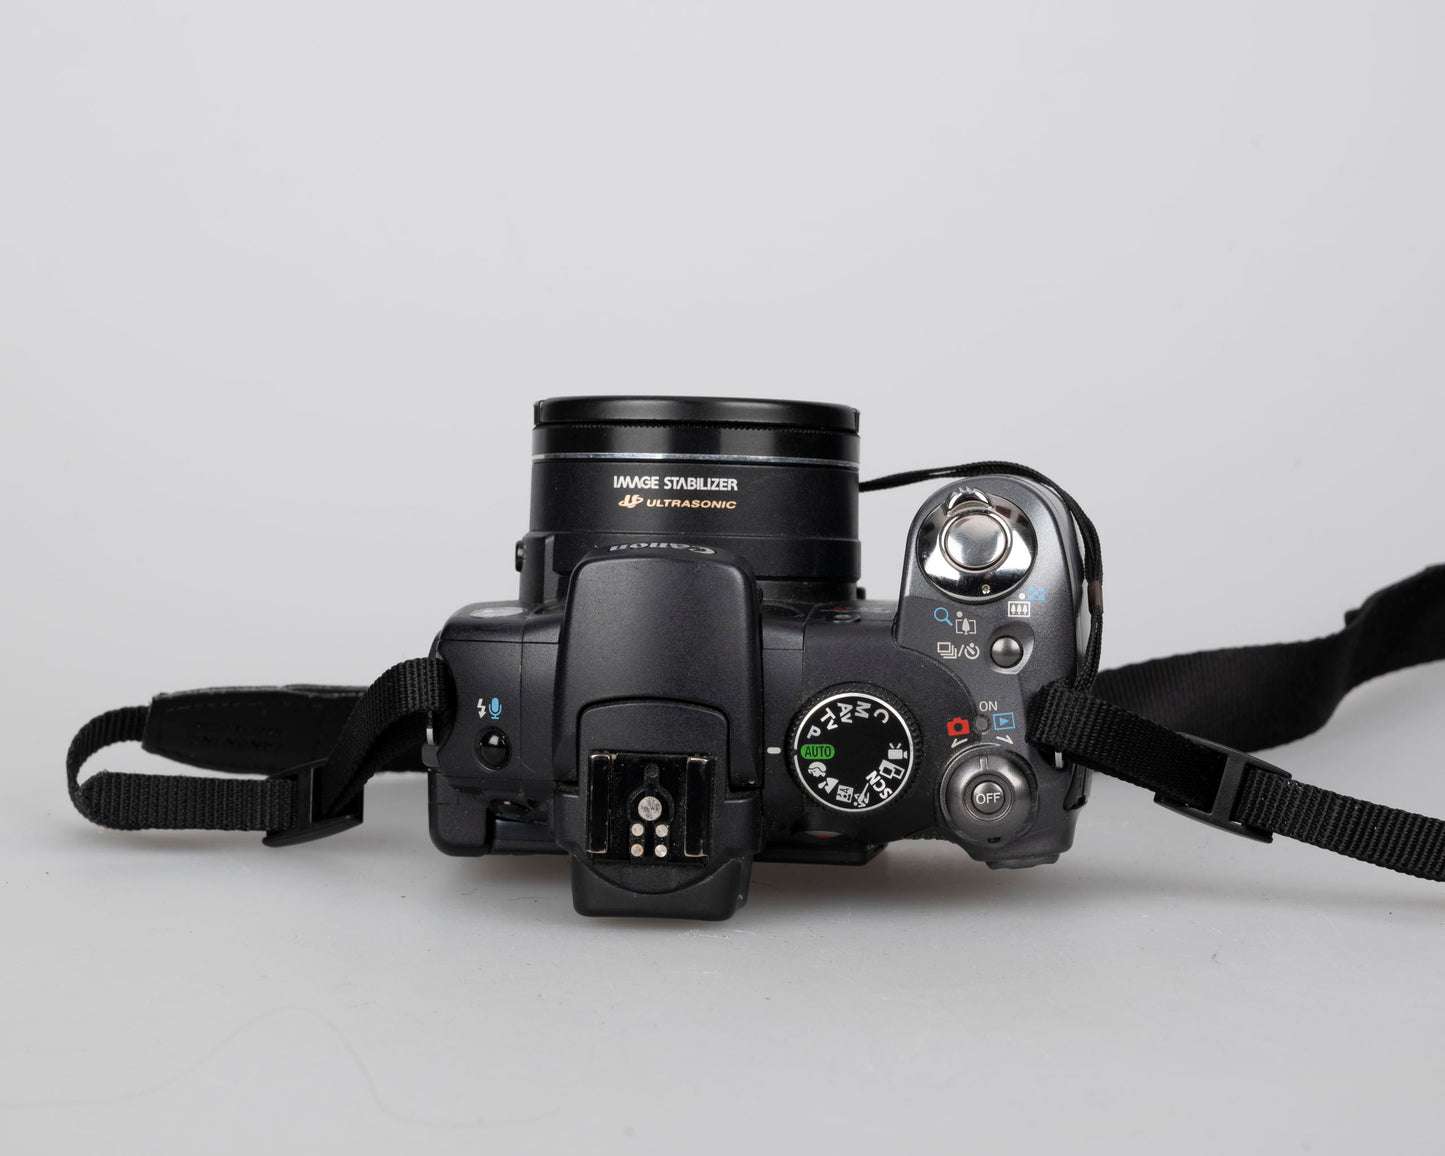 Canon Powershot S5 IS digicam w/ 8 MP CCD sensor + 4 GB SD card (uses AA batteries)